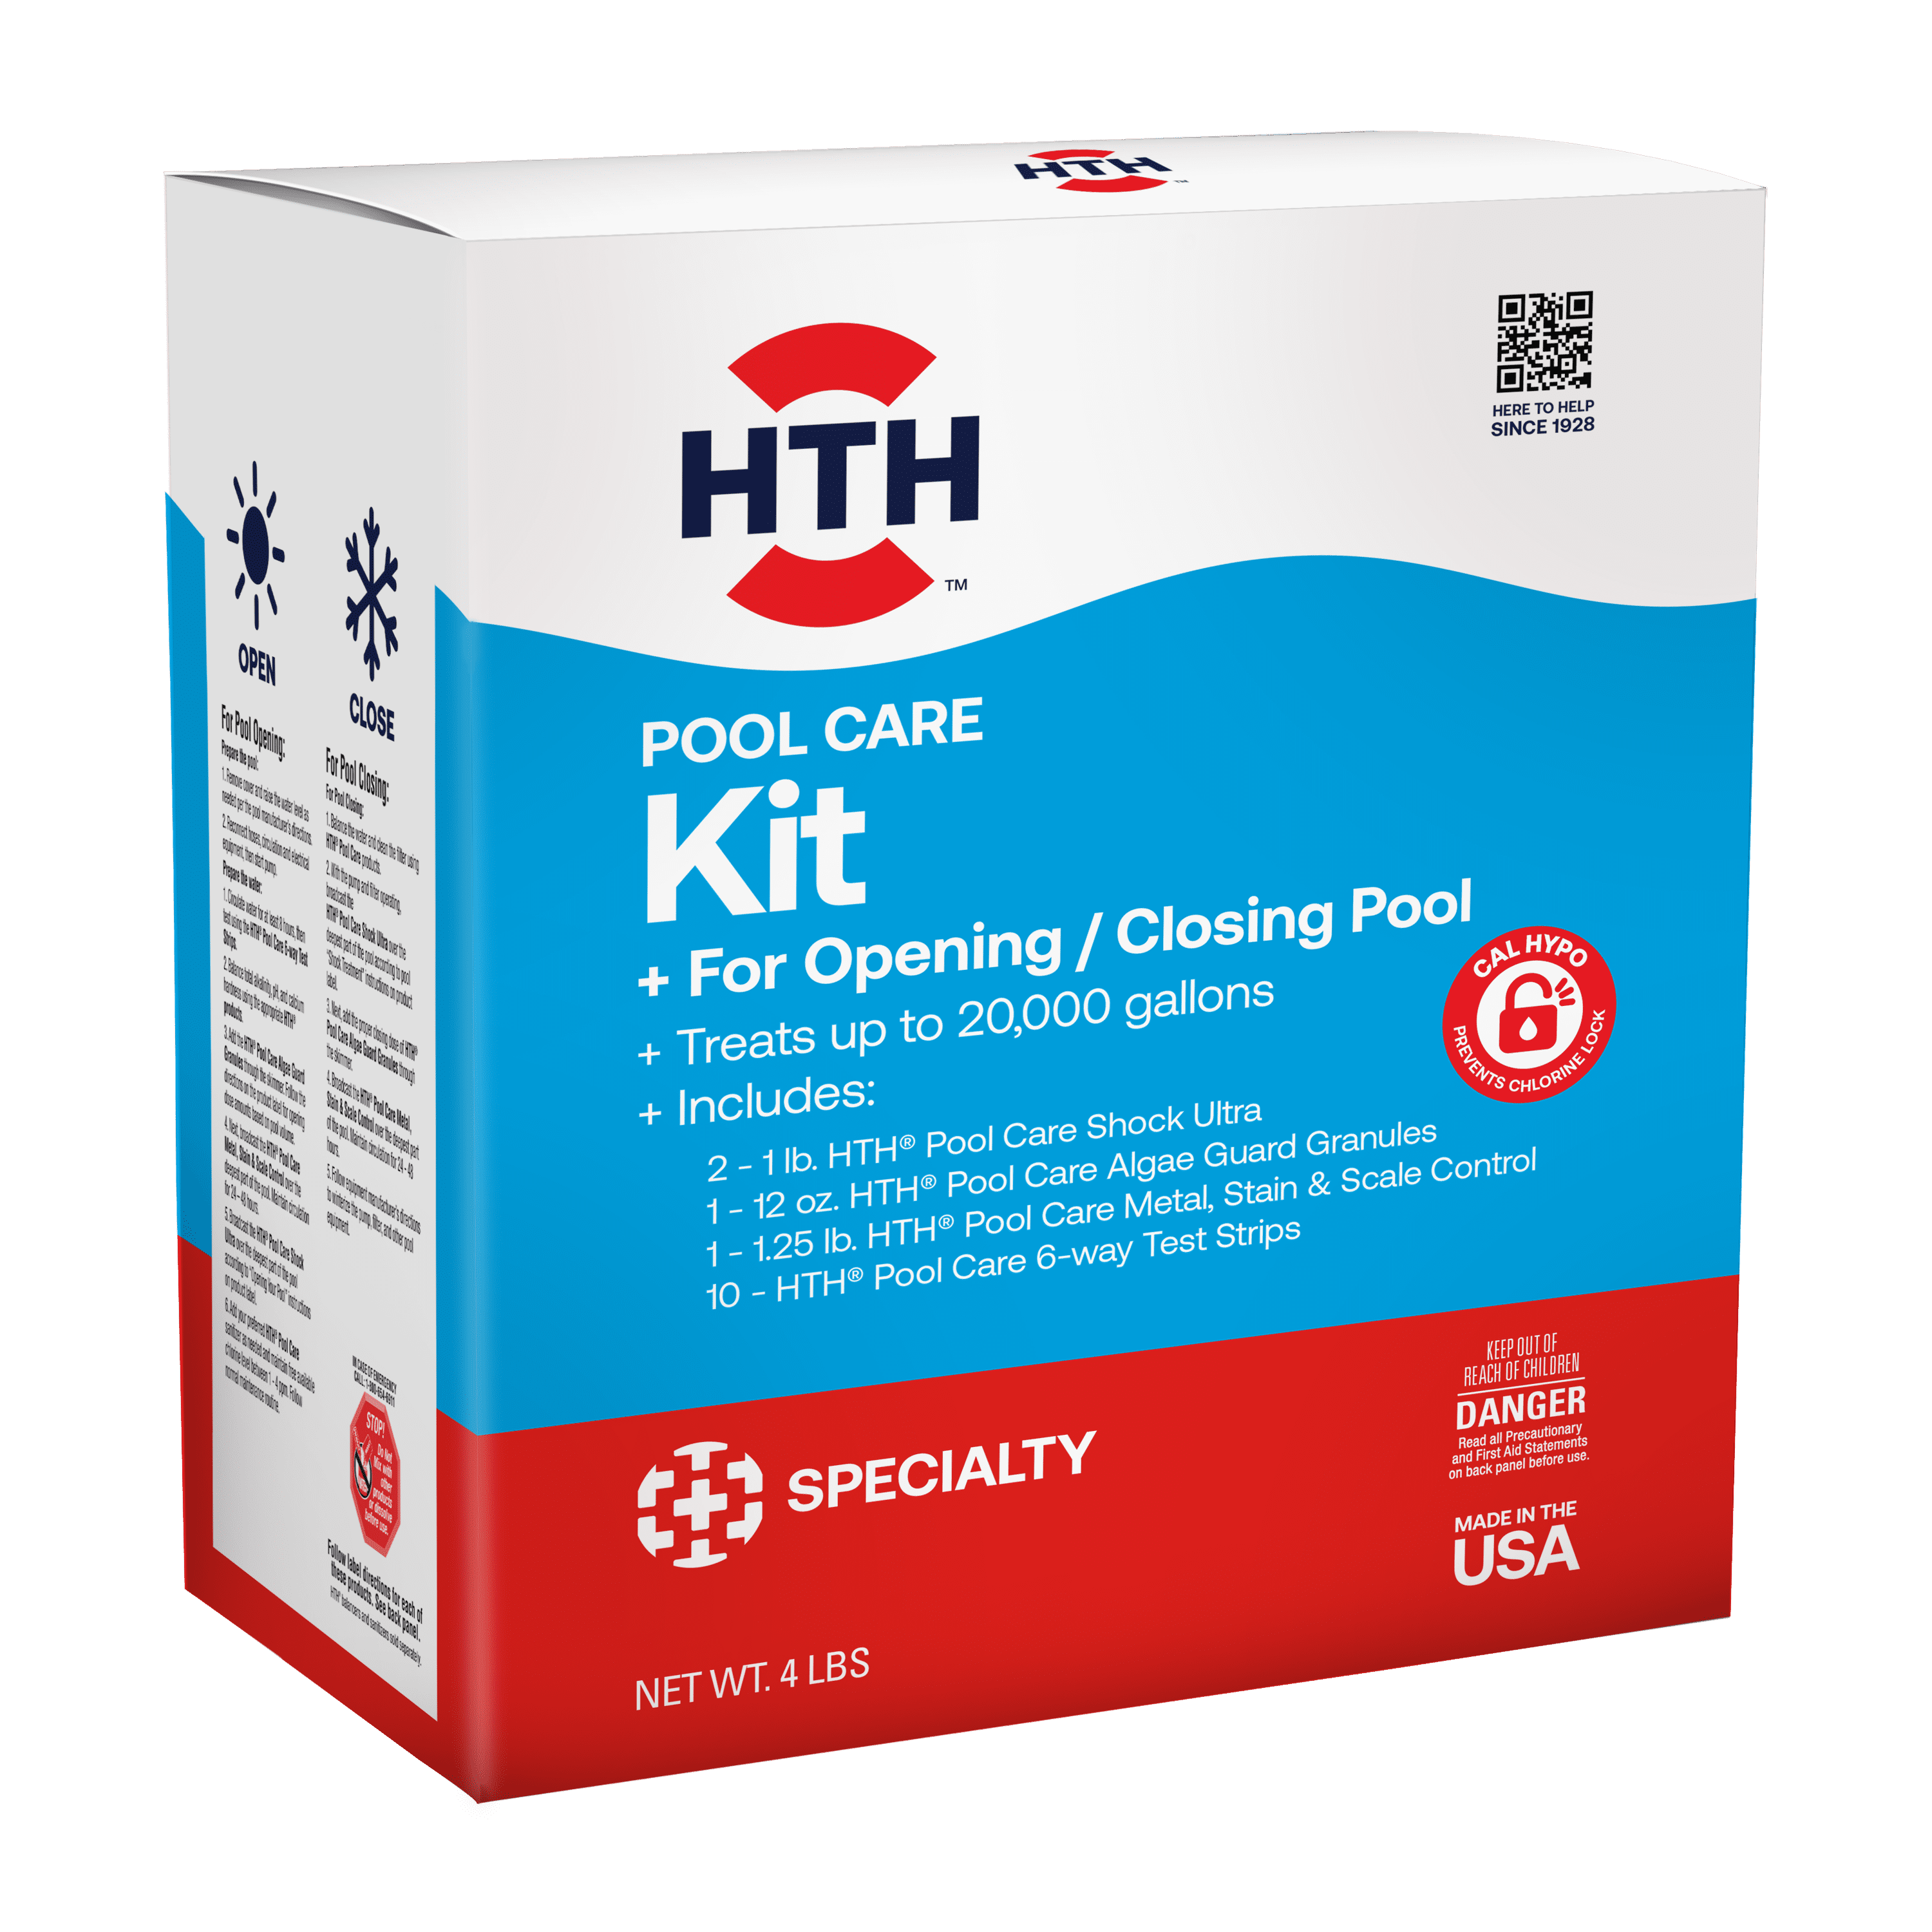 HTH Pool Care Kit for Swimming Pools, Kit